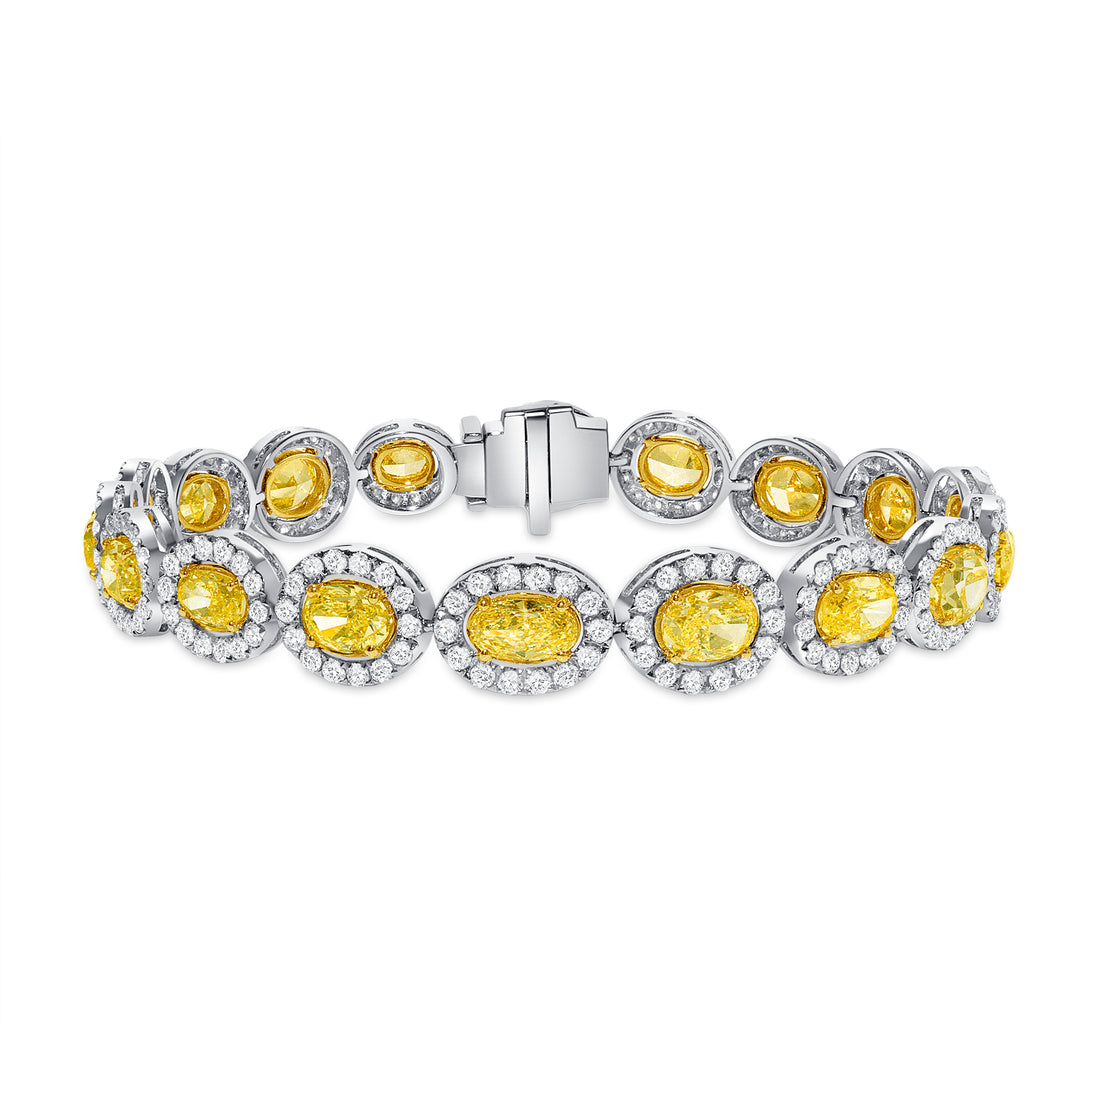 Round Brilliant Diamond and Oval Fancy Yellow Diamond Bracelet